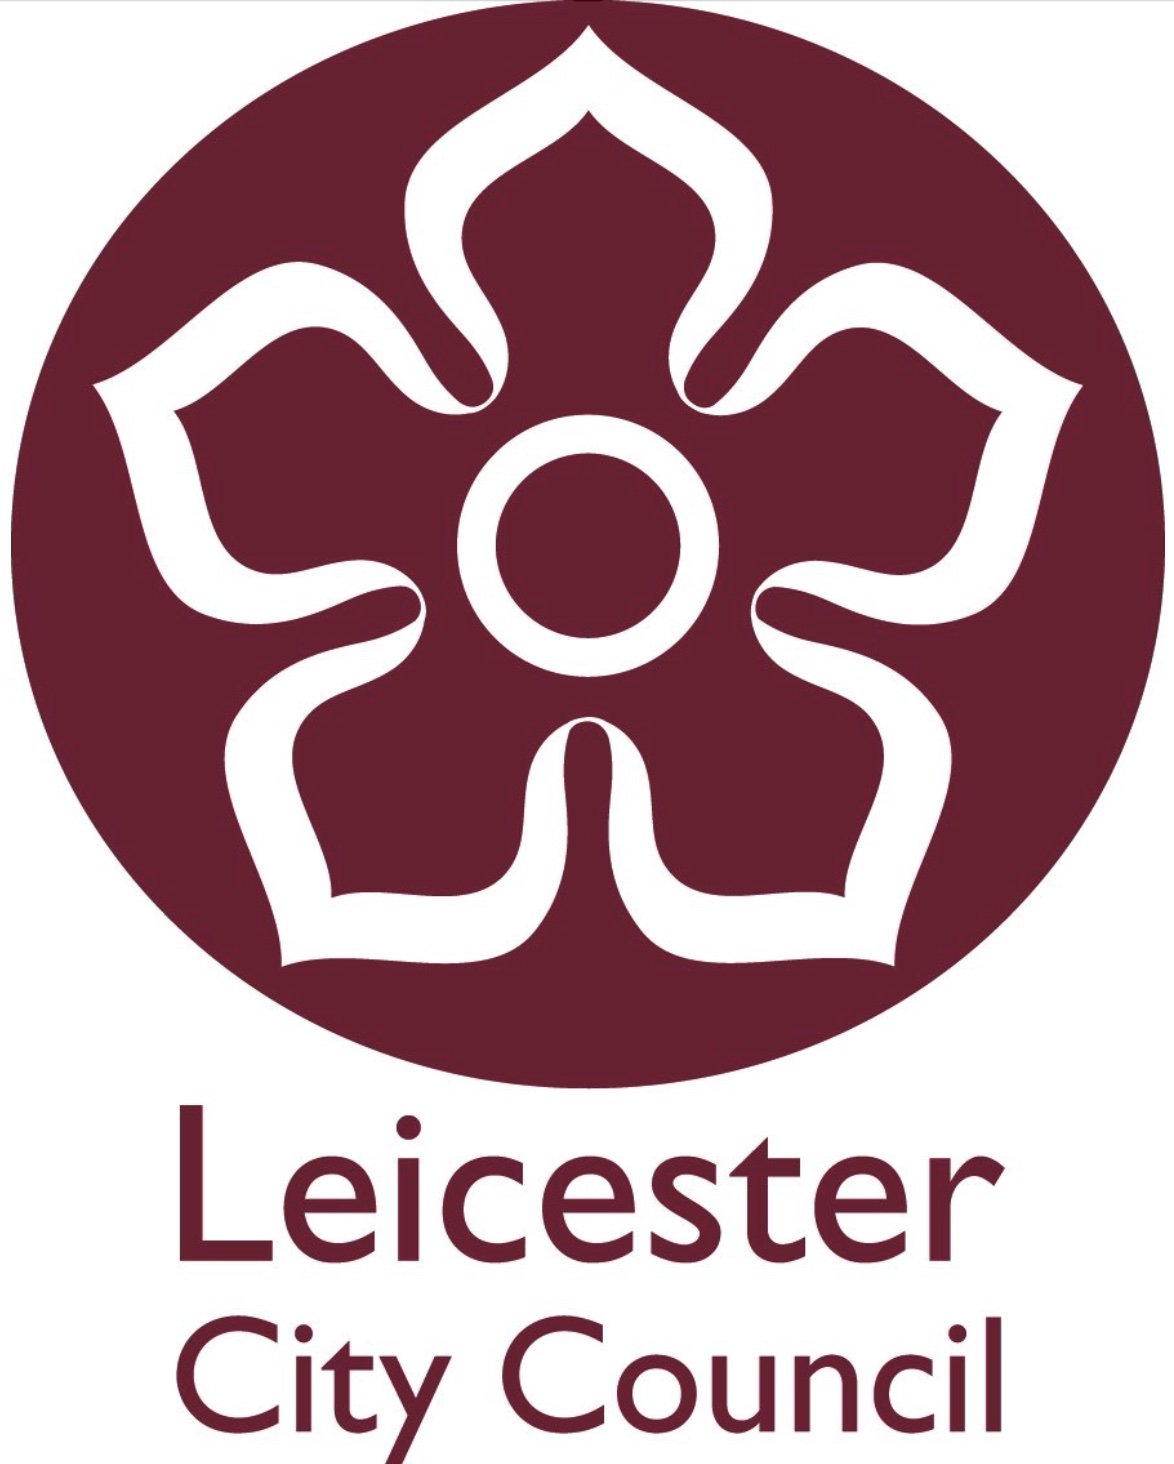 LeicesterCC-logo-PublicSectorTranslation.jpg